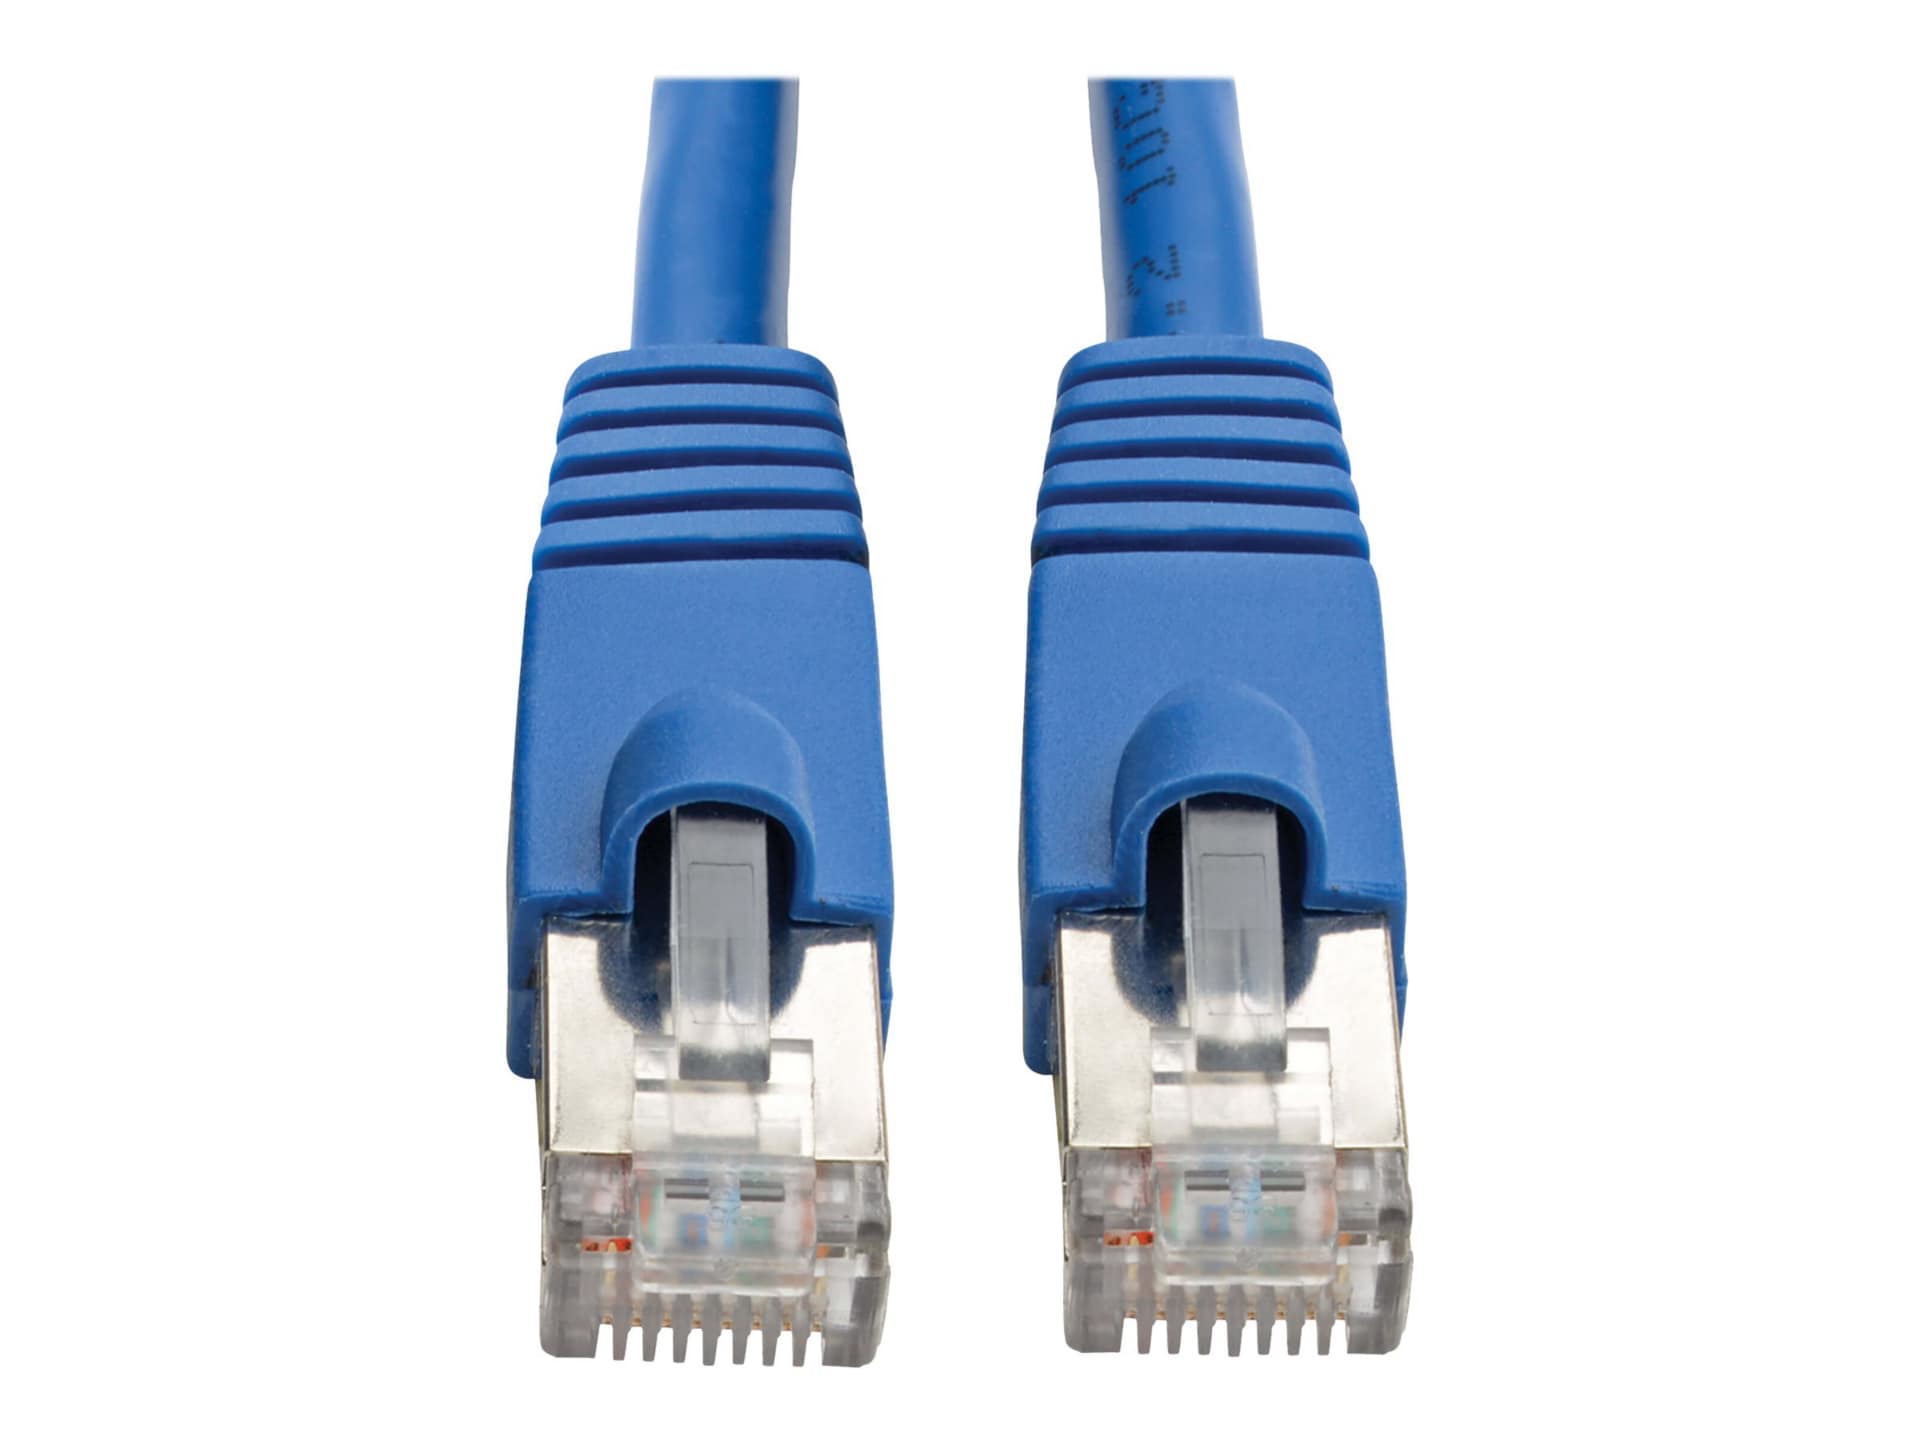 Eaton Tripp Lite Series Cat6a 10G Snagless Shielded STP Ethernet Cable (RJ45 M/M), PoE, Blue, 30 ft. (9.14 m) - patch